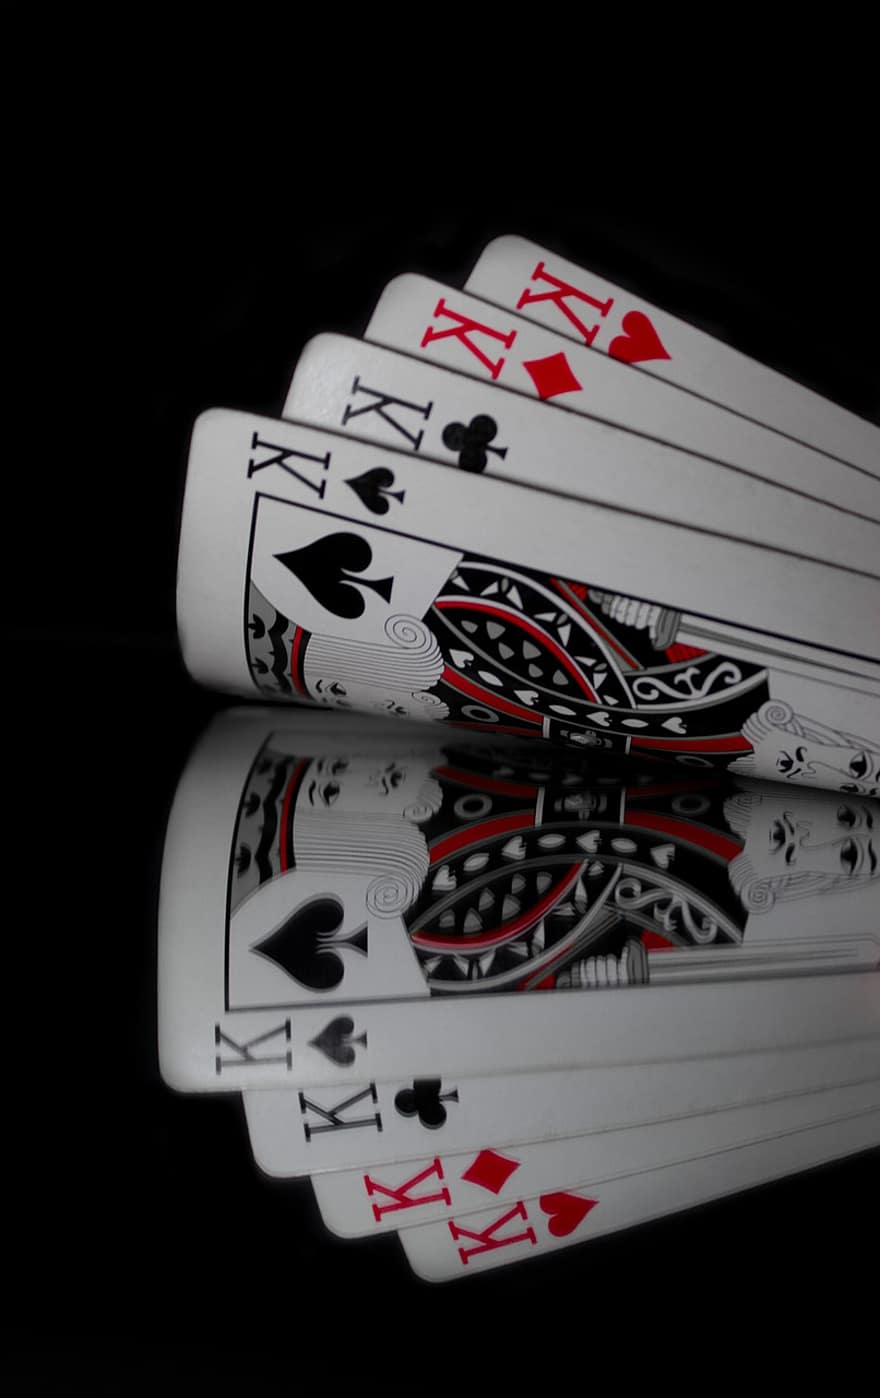 kortit, uhkapeli, heijastus, pokeri, korttipelit, kasino, ässä, pelata, onni, lapio, menestys